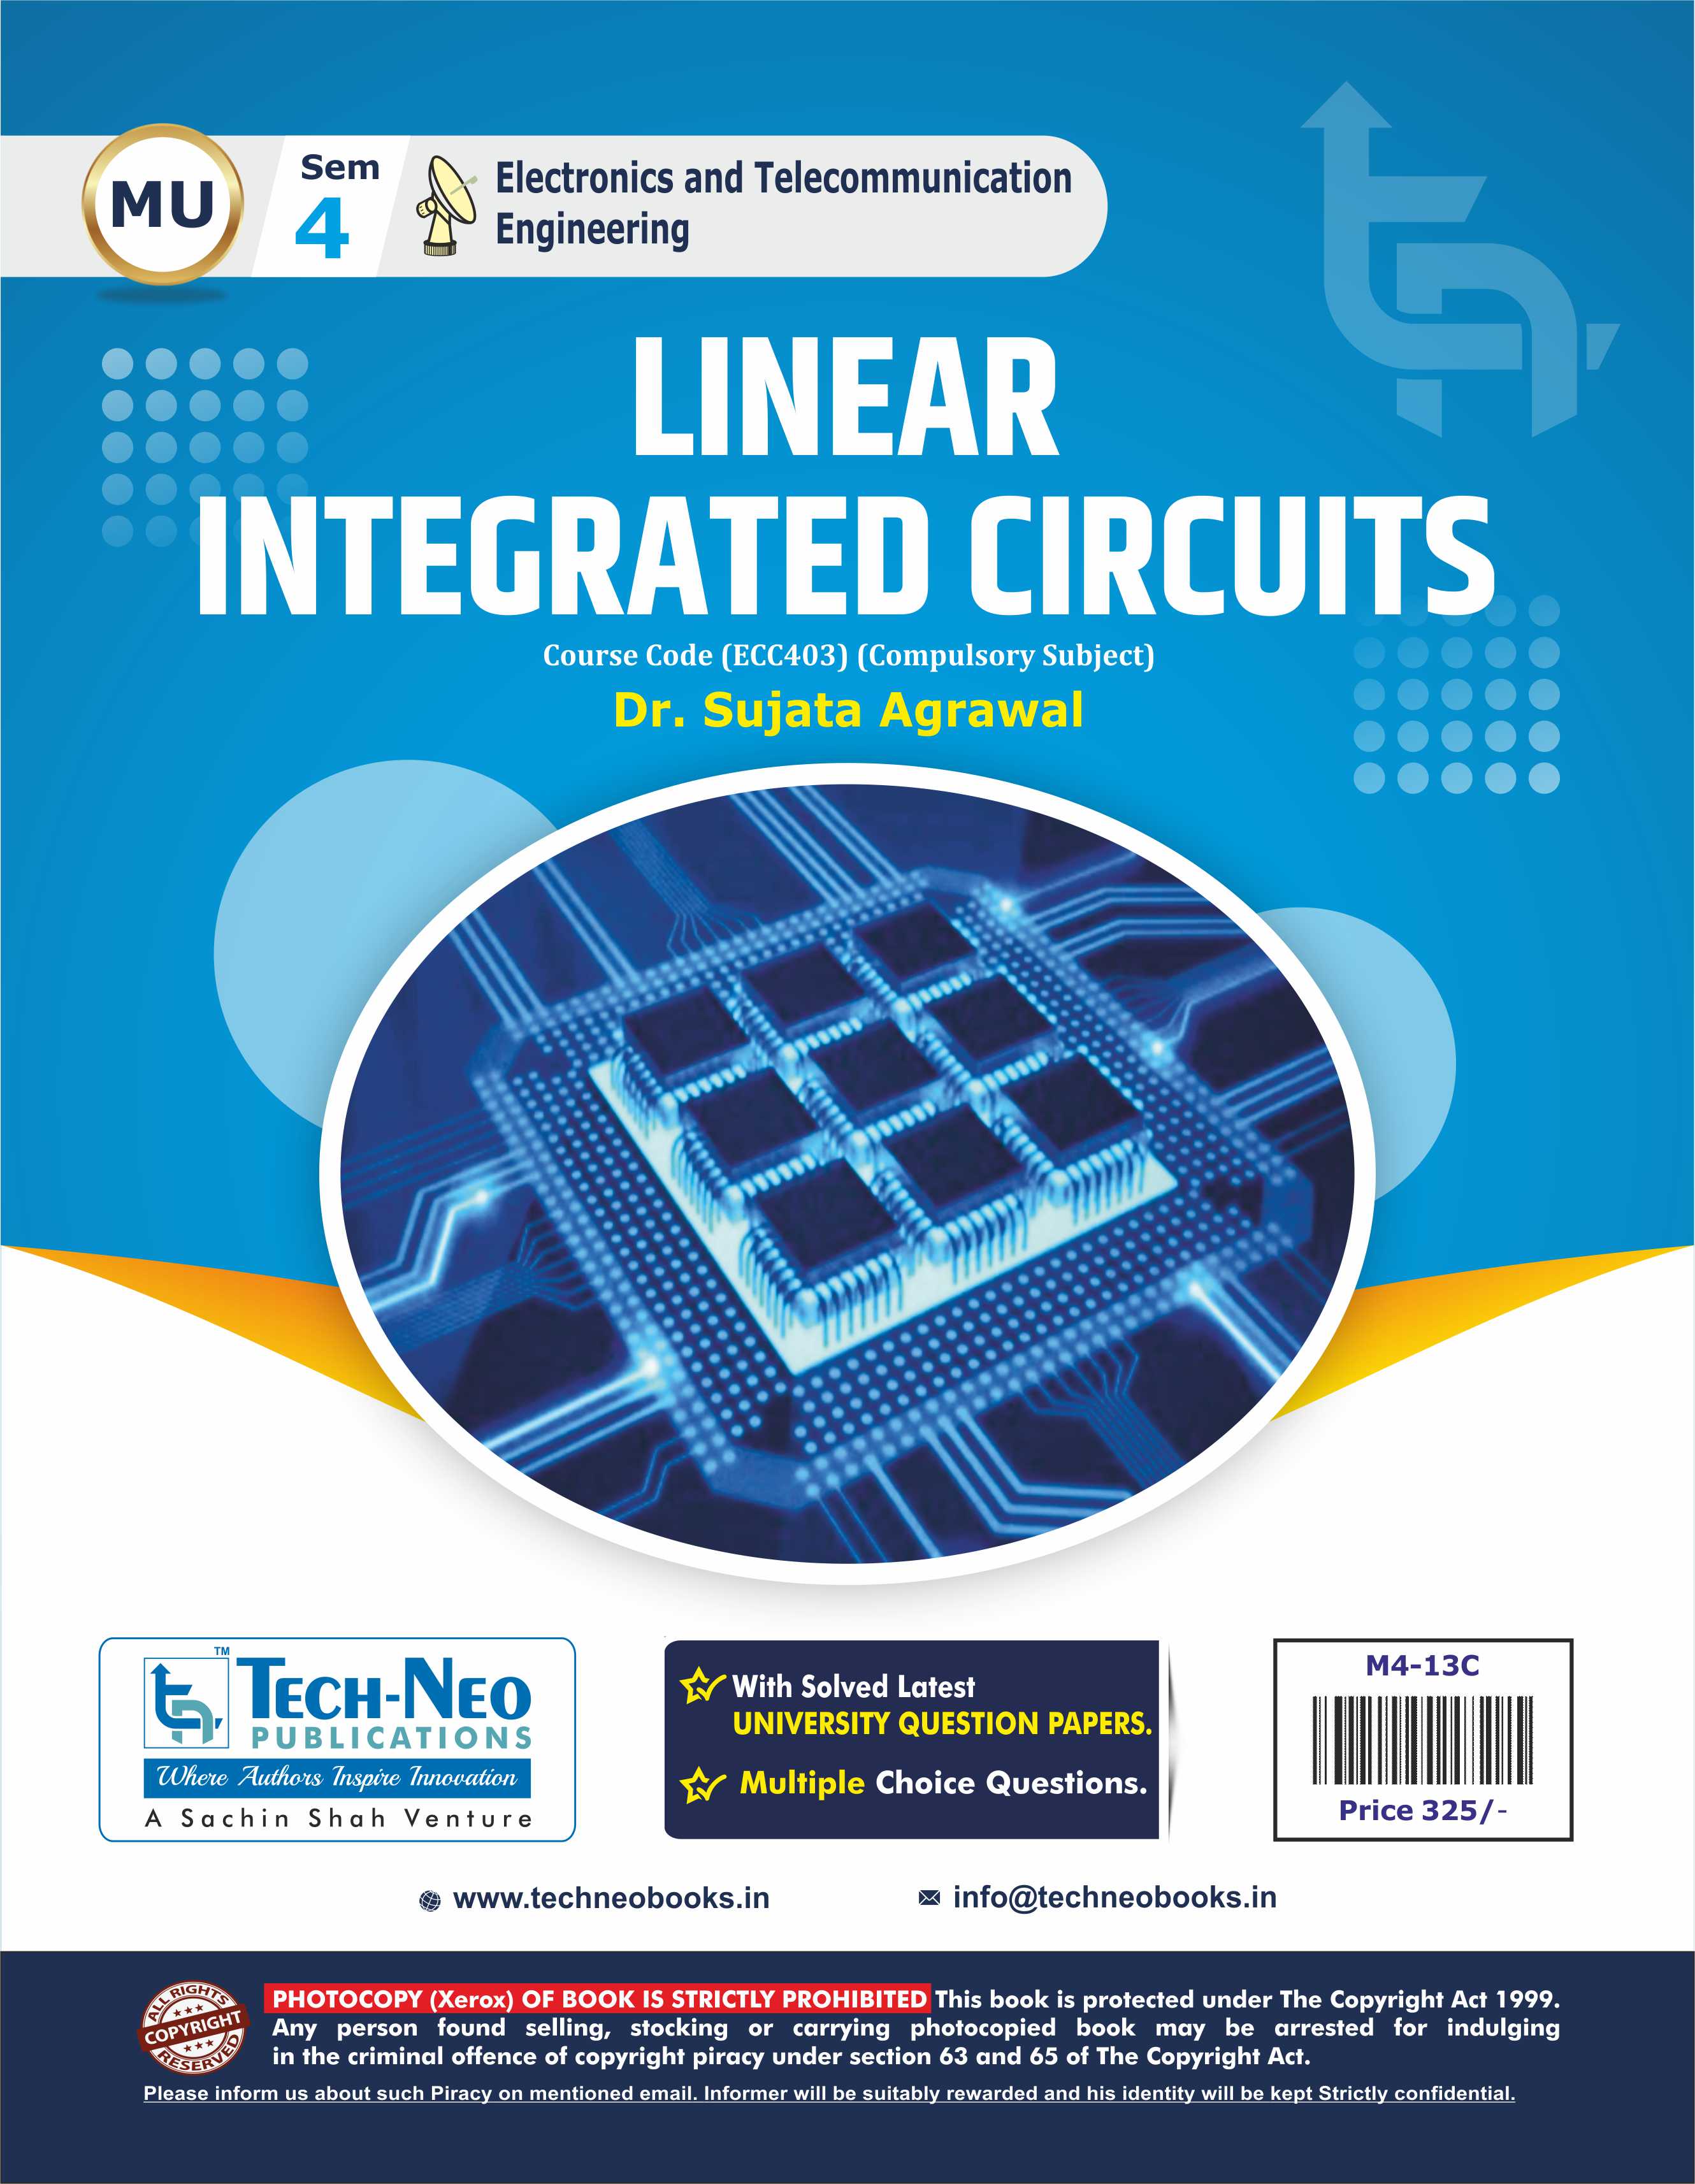 Linear Integrated Circuits (ECC403)